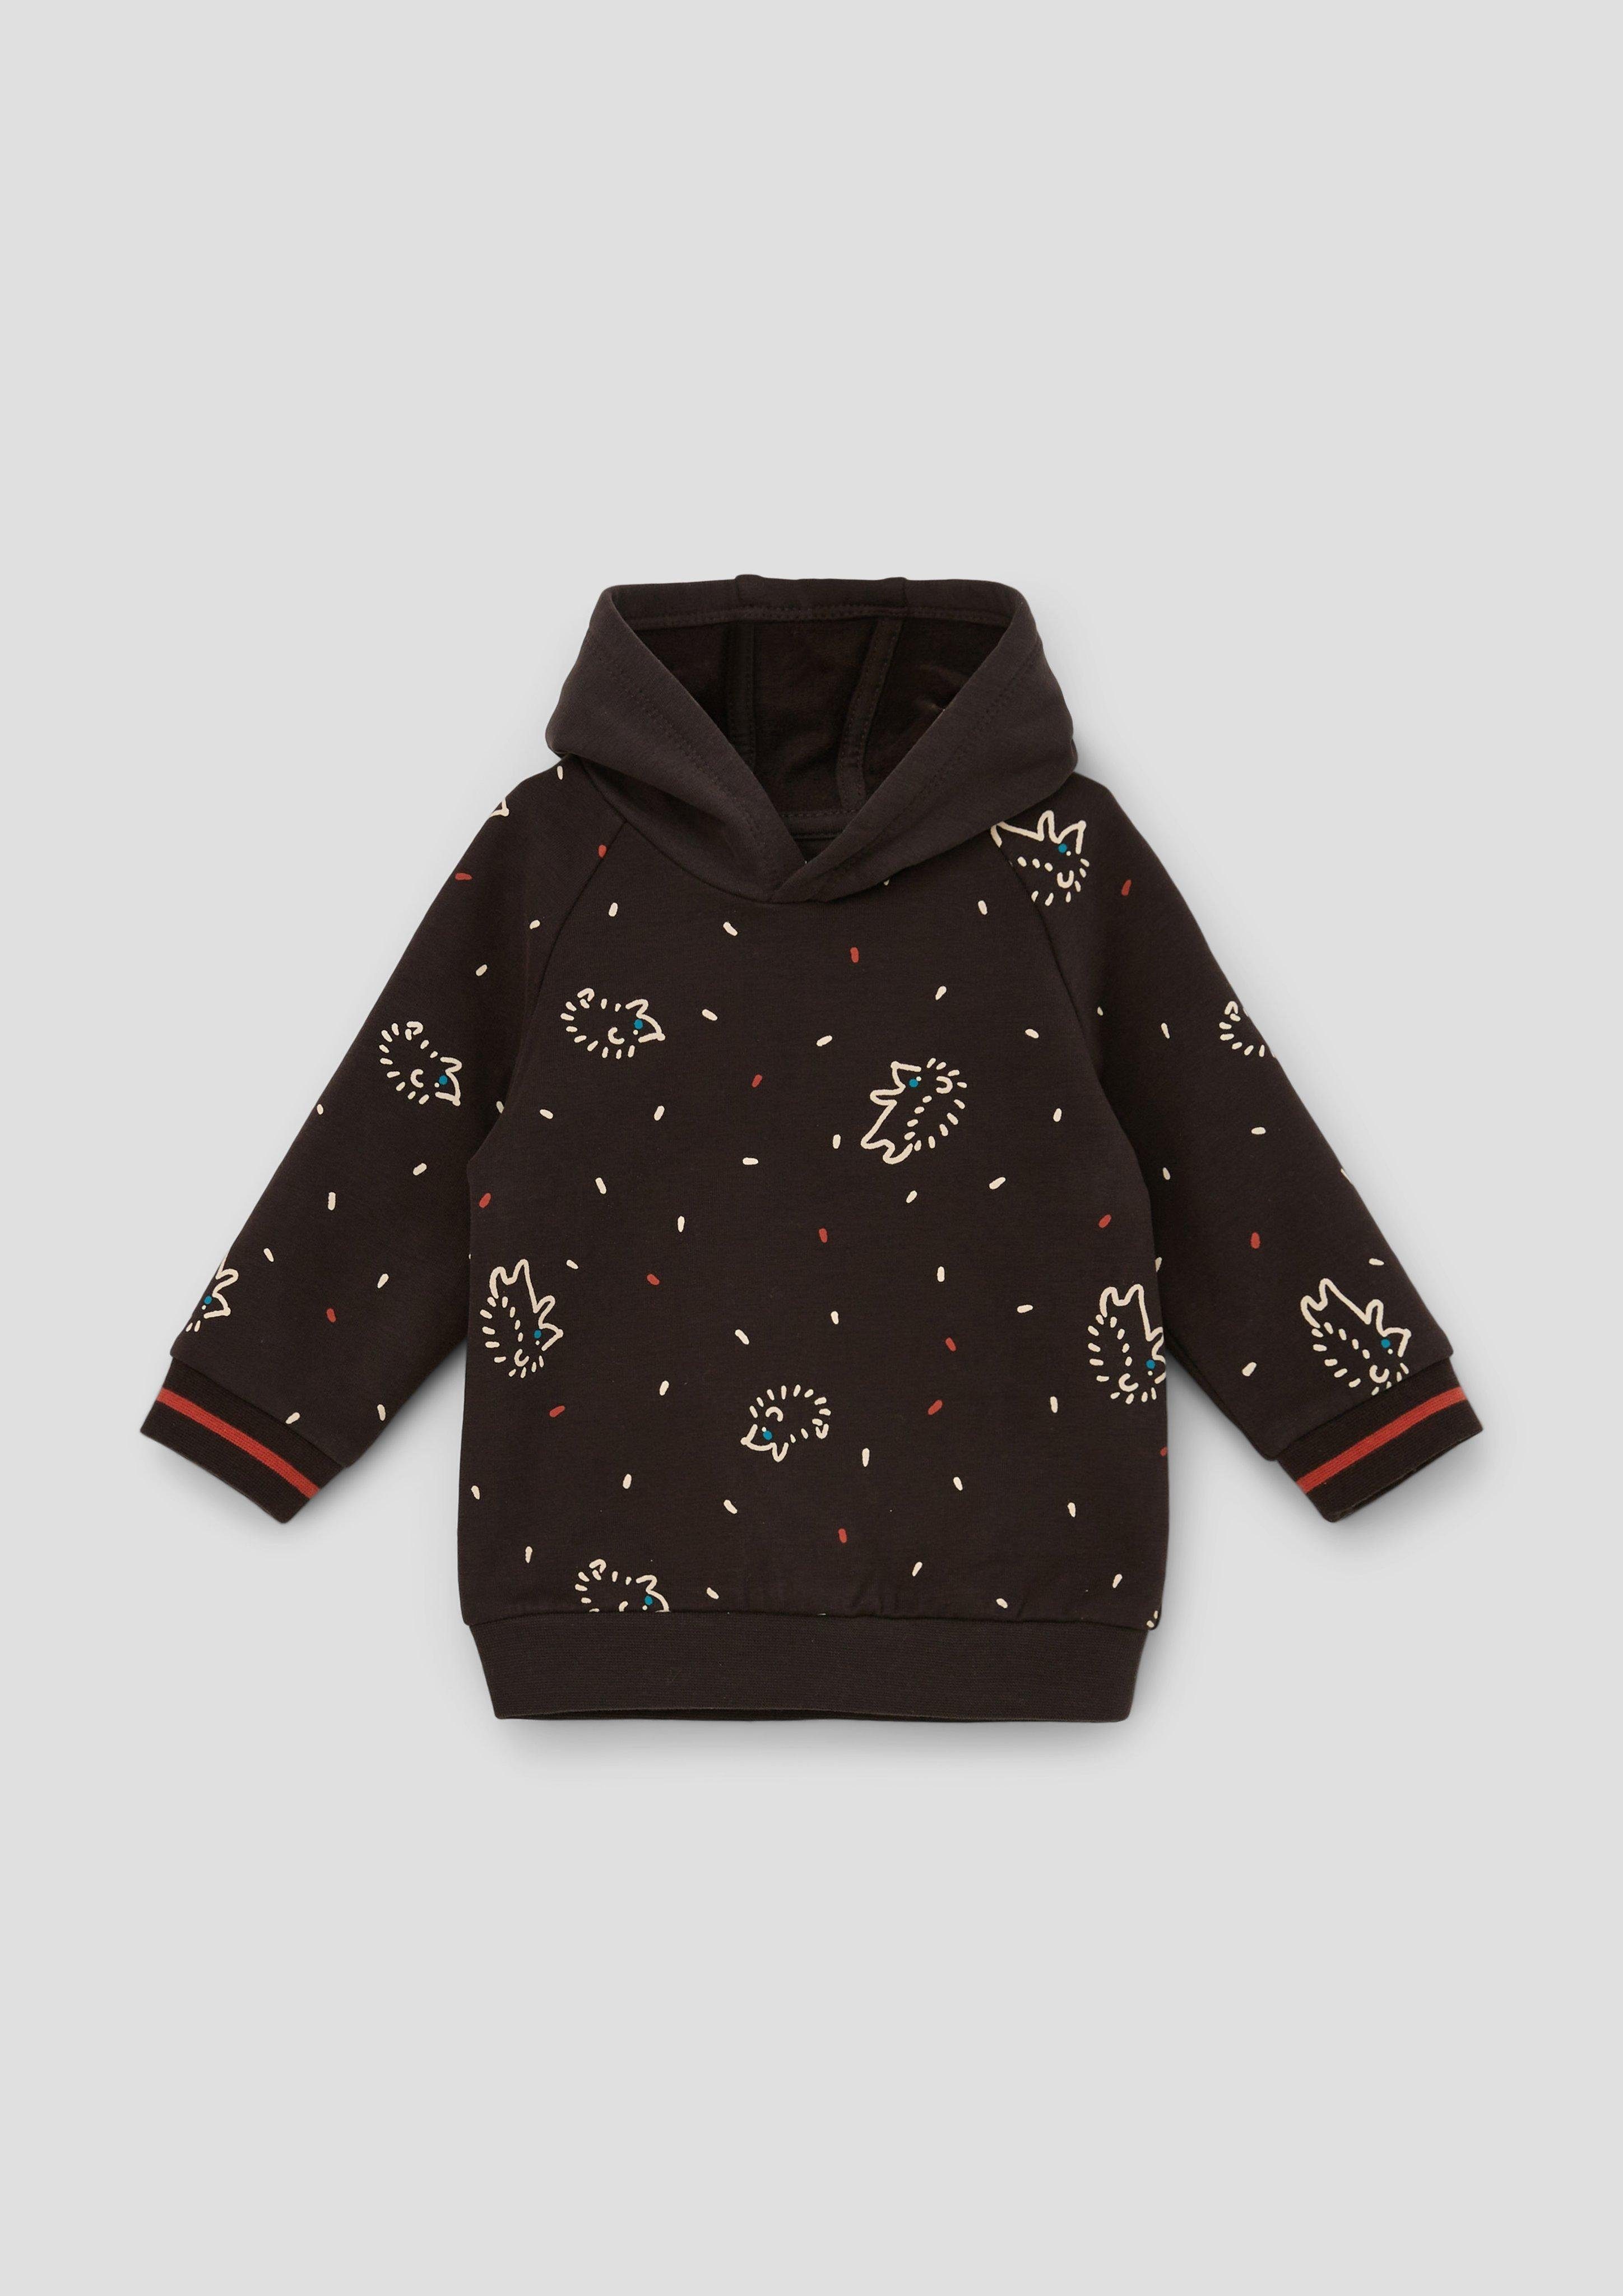 s.Oliver Sweatshirt Kapuzensweatshirt mit Allover-Print Kontrast-Details dunkelbraun